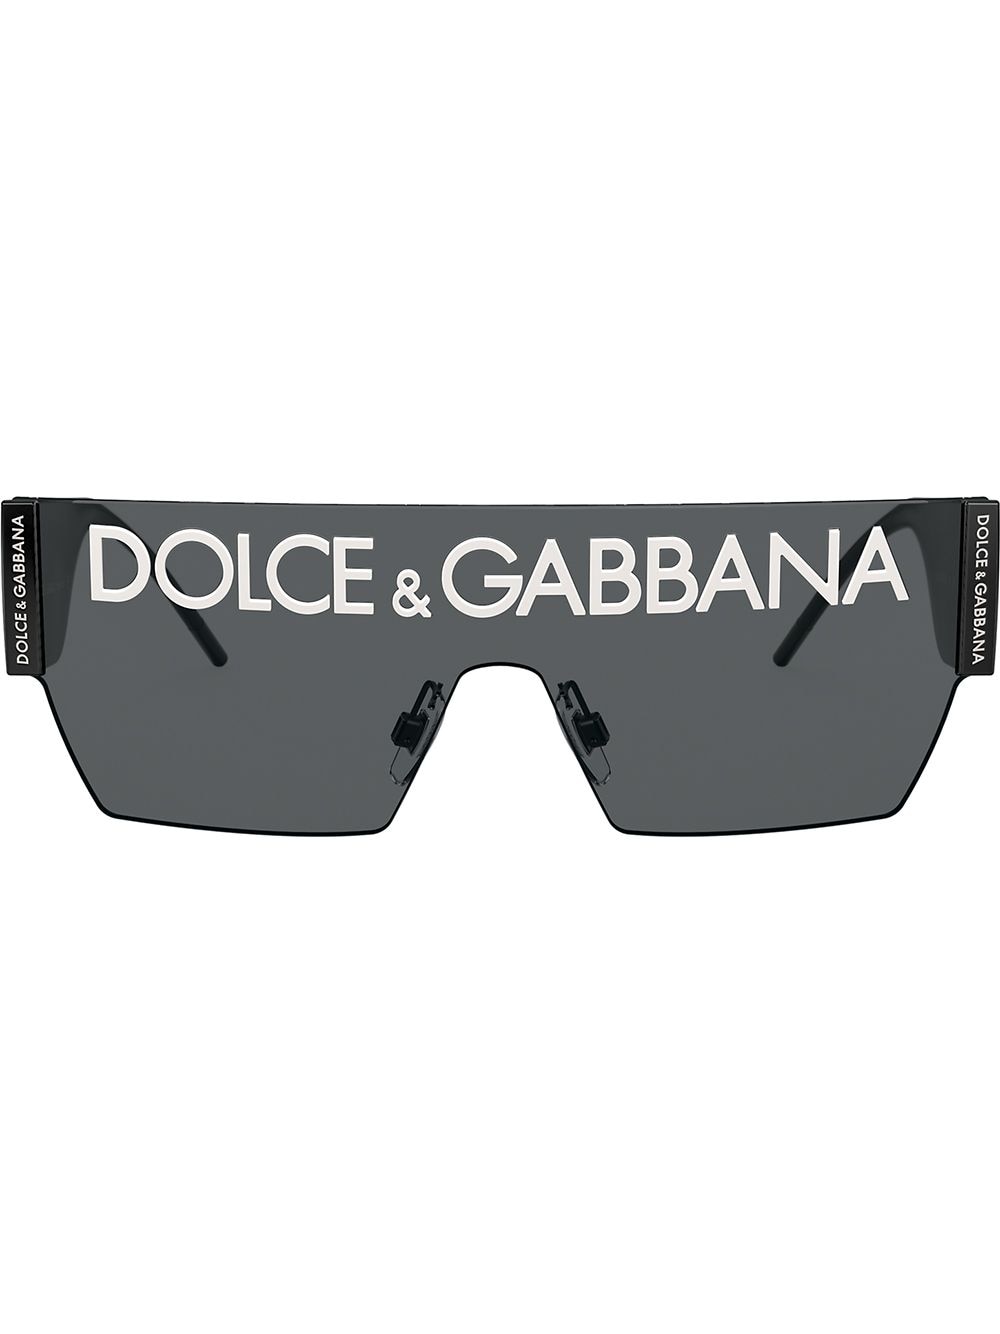 d&g logo sunglasses